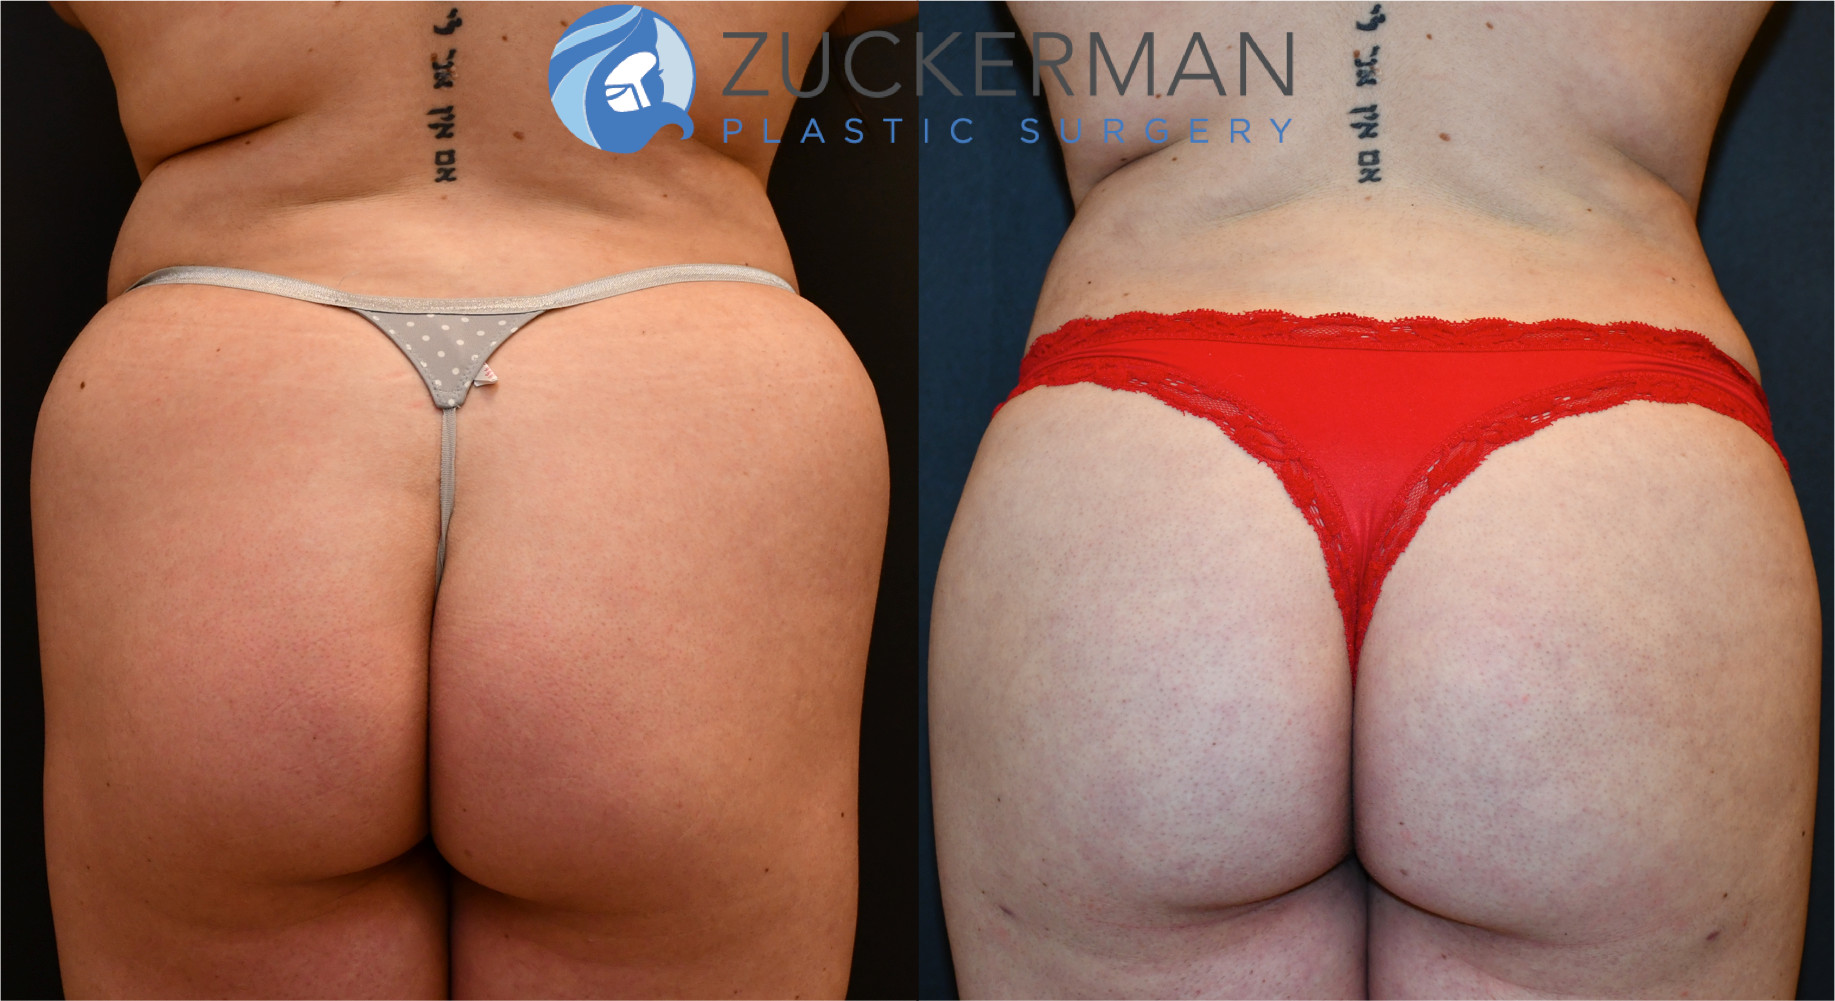 brazilian butt lift, bbl, buttock augmentation, joshua zuckerman, featured, 2, fat grafting, buttocks, posterior view